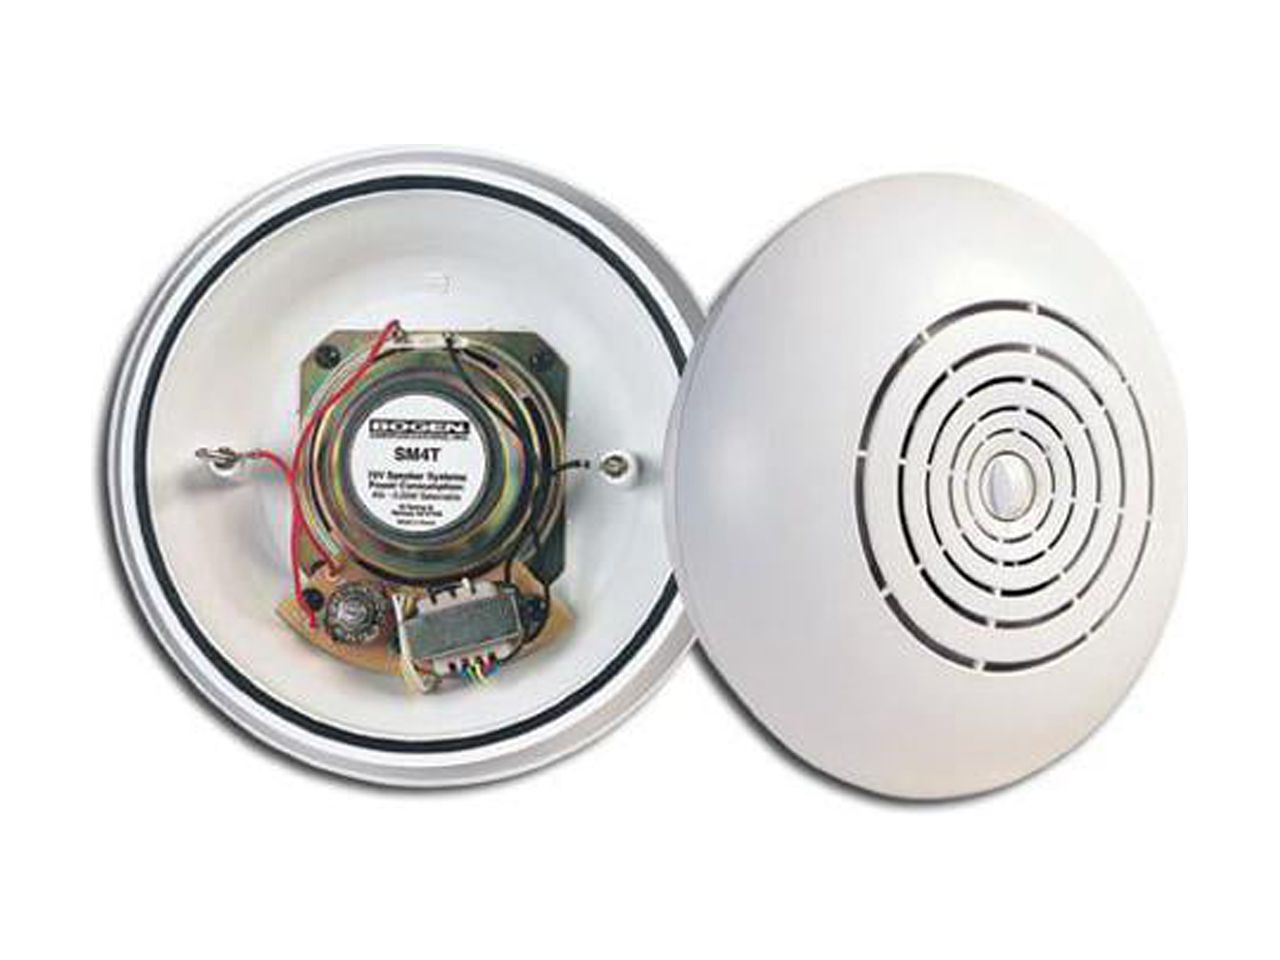 Bogen SM4T Paging Ceiling Speaker 4-Watt - Easy Install - image 1 of 2